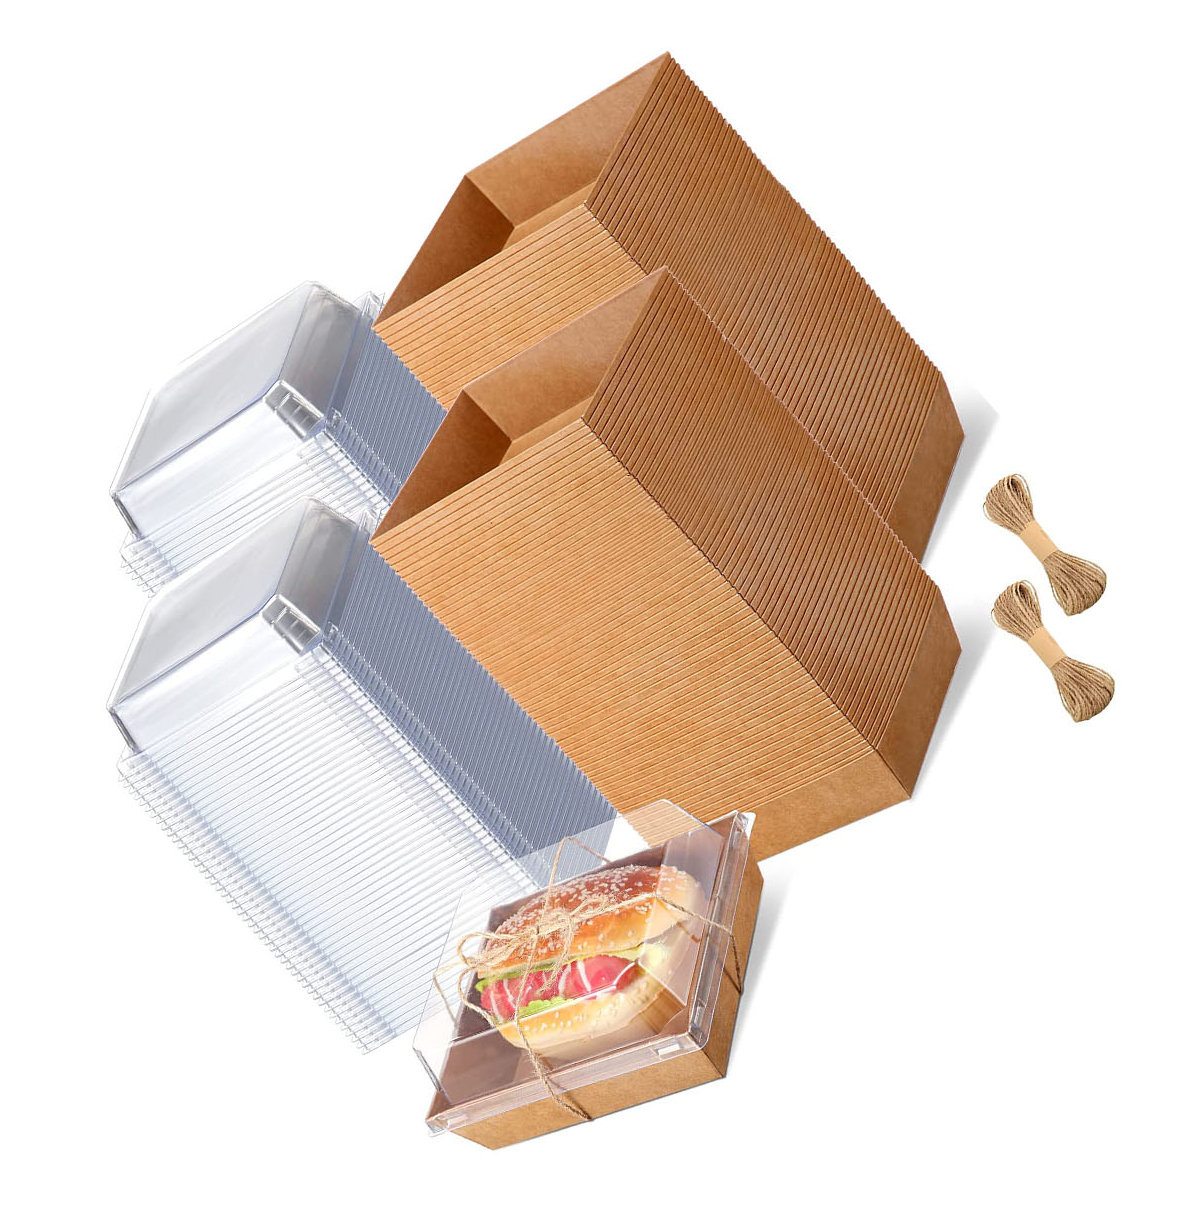 Paper Charcuterie Boxes 50PCS Disposable To Go Dessert Container Bakery  Boxes